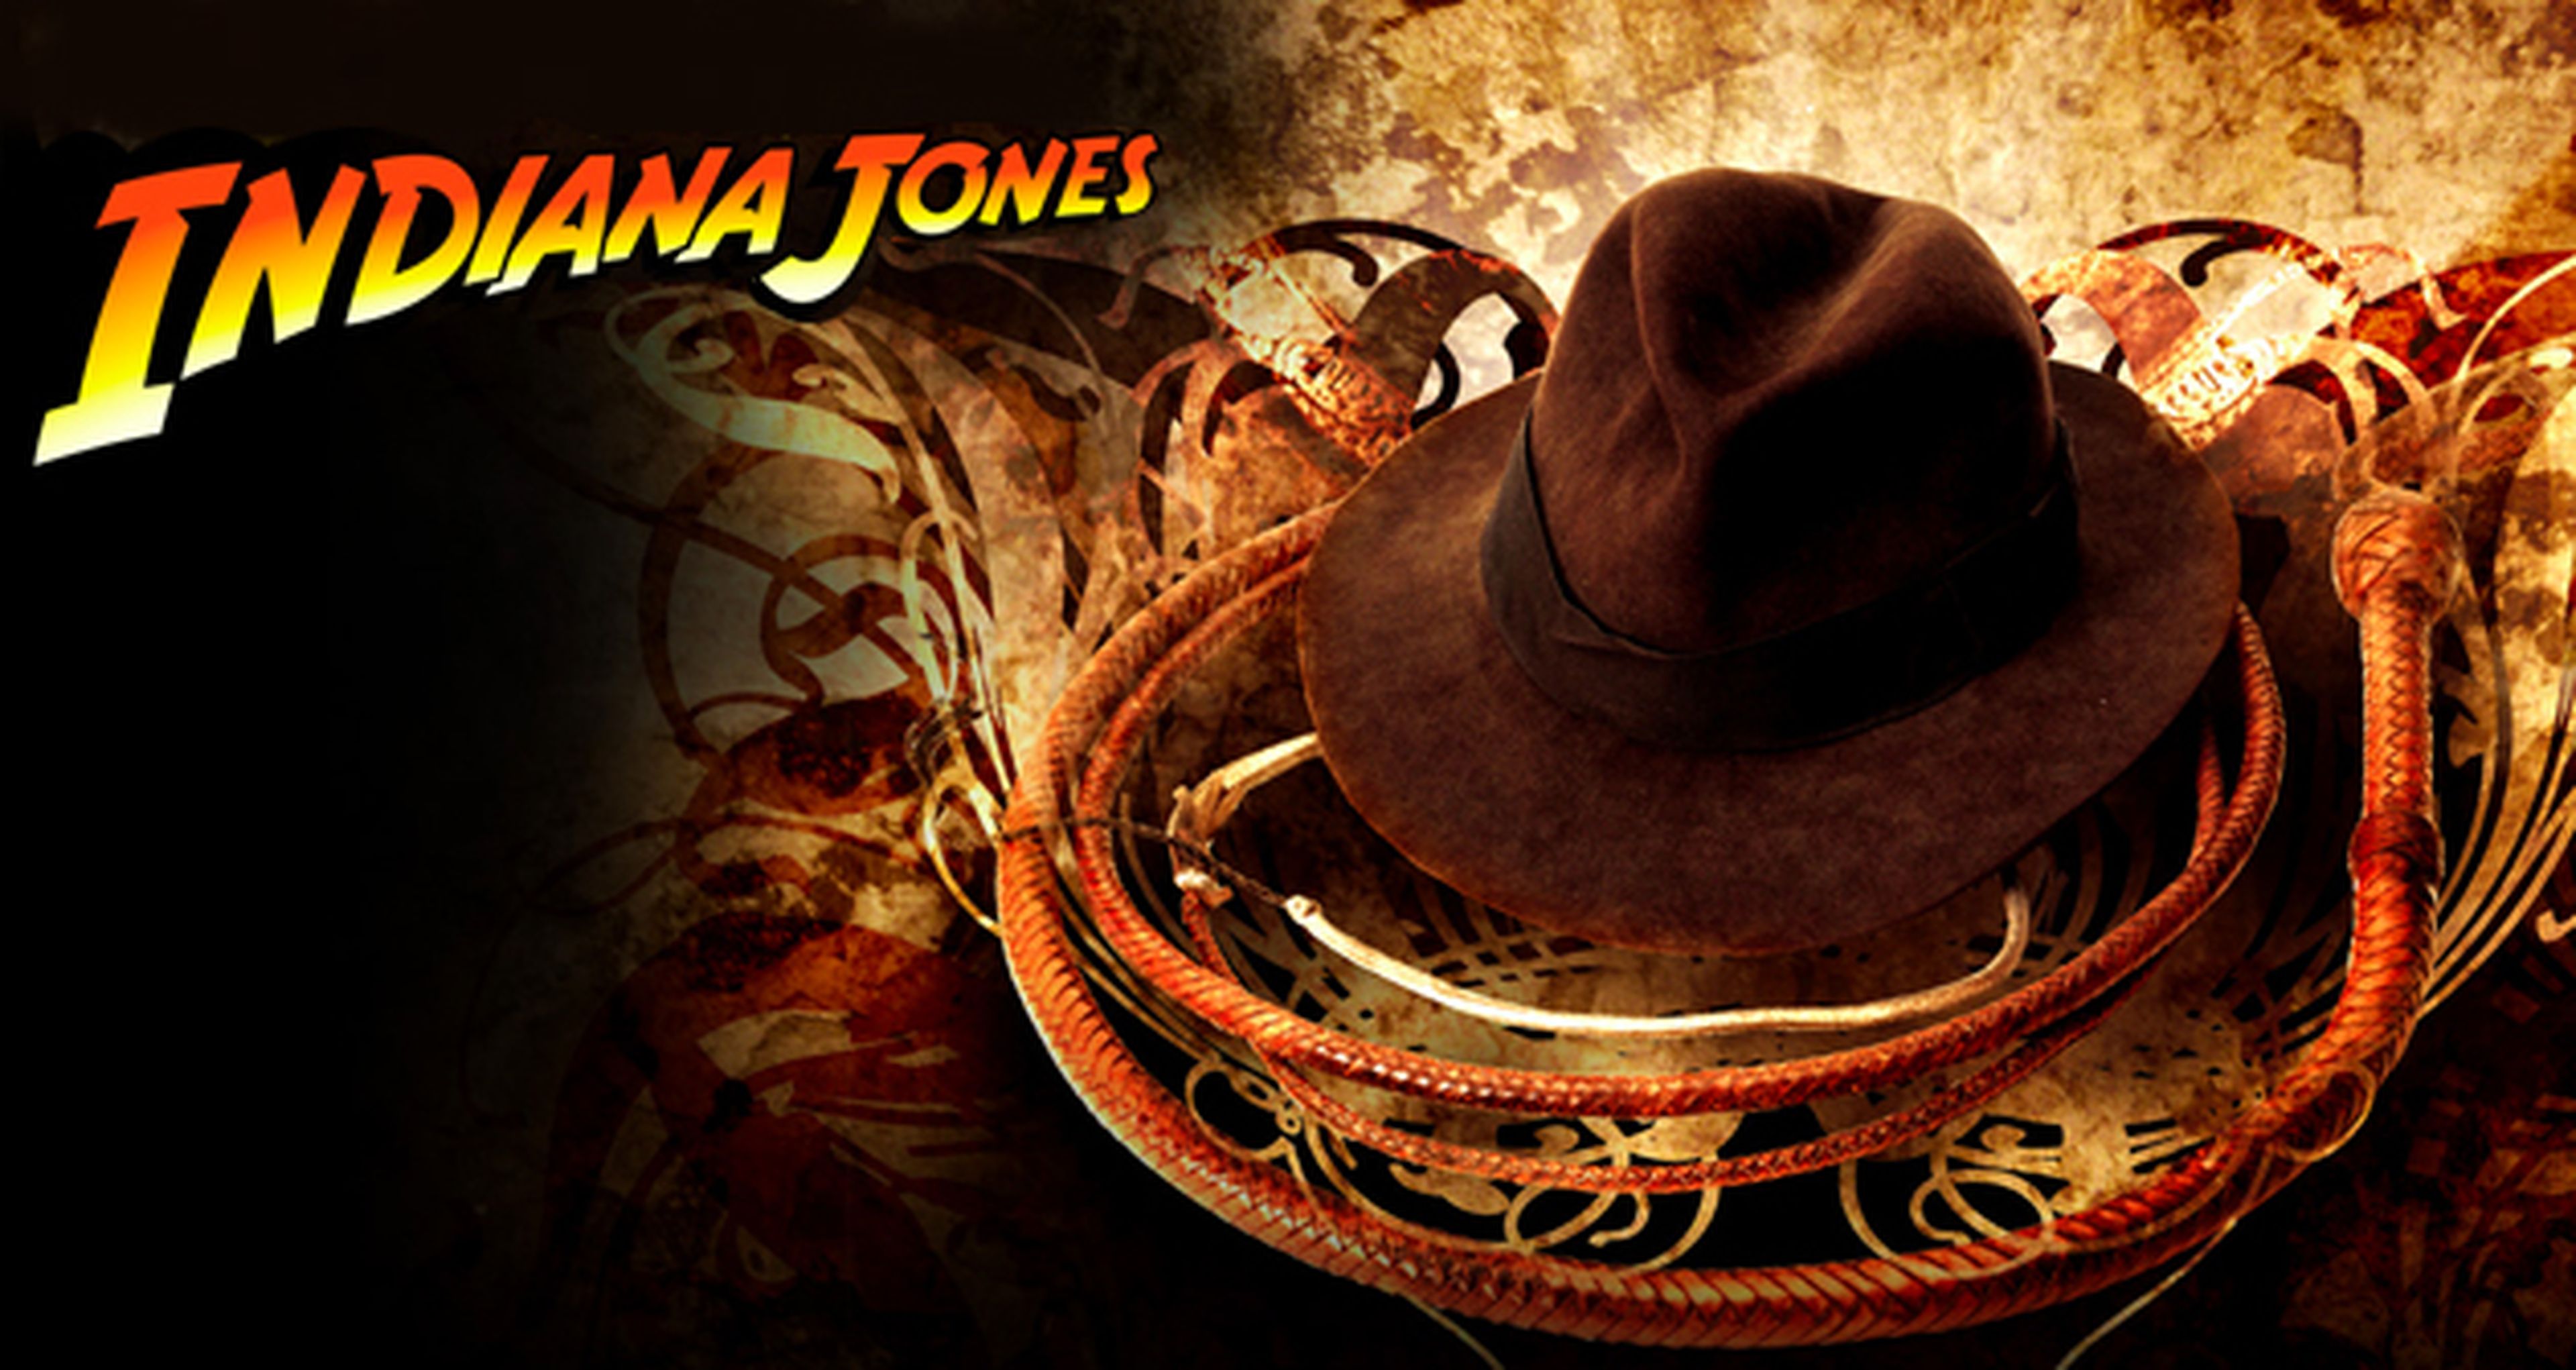 Disney distribuirá Indiana Jones 5